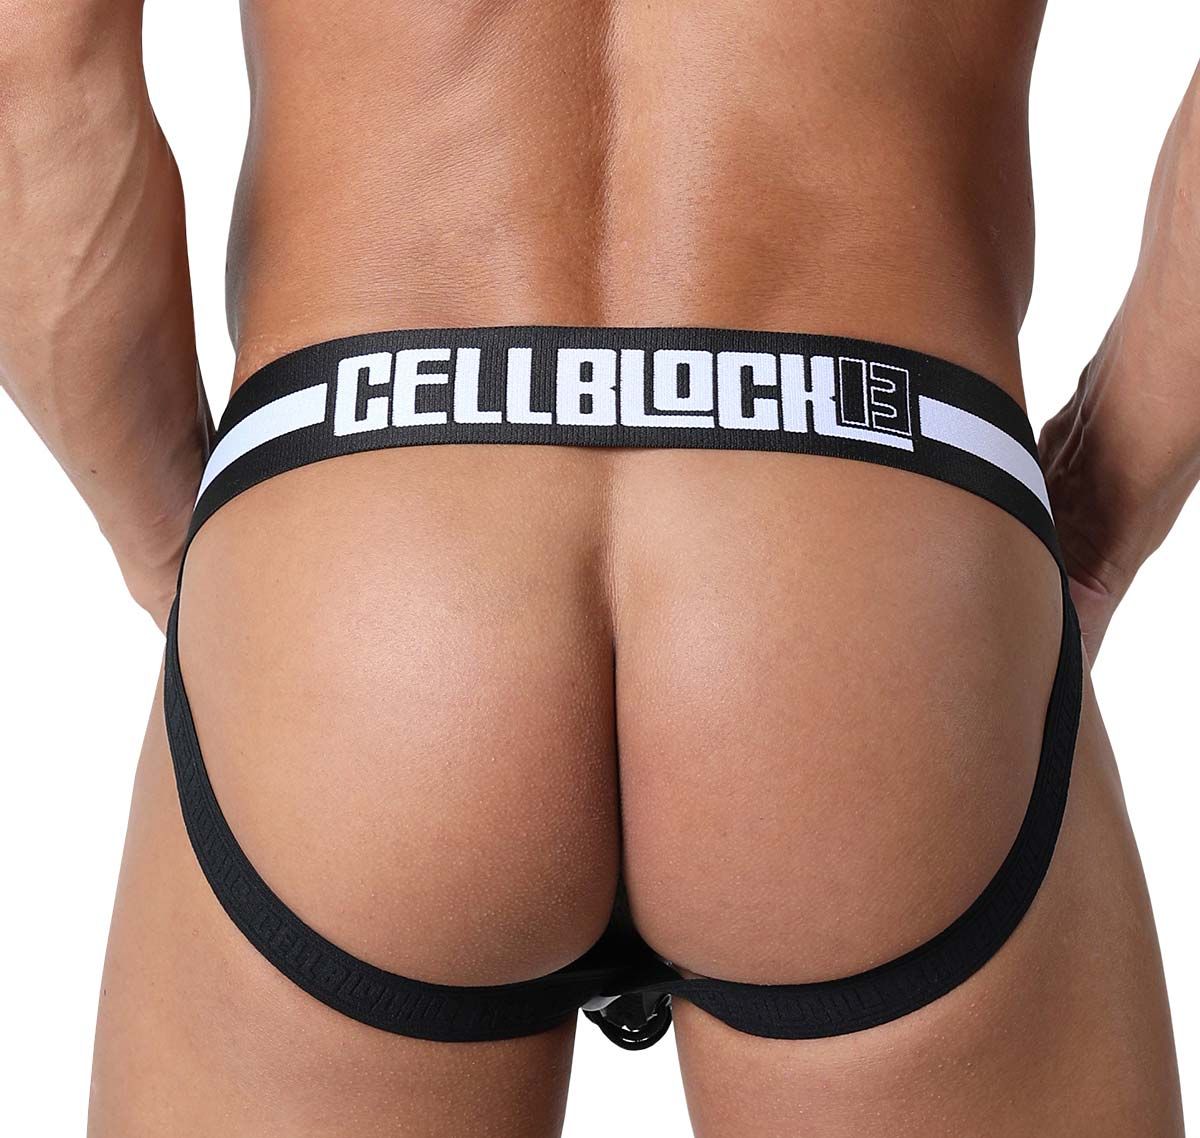 Cellblock 13 Jockstrap KICK-OFF JOCKSTRAP, white